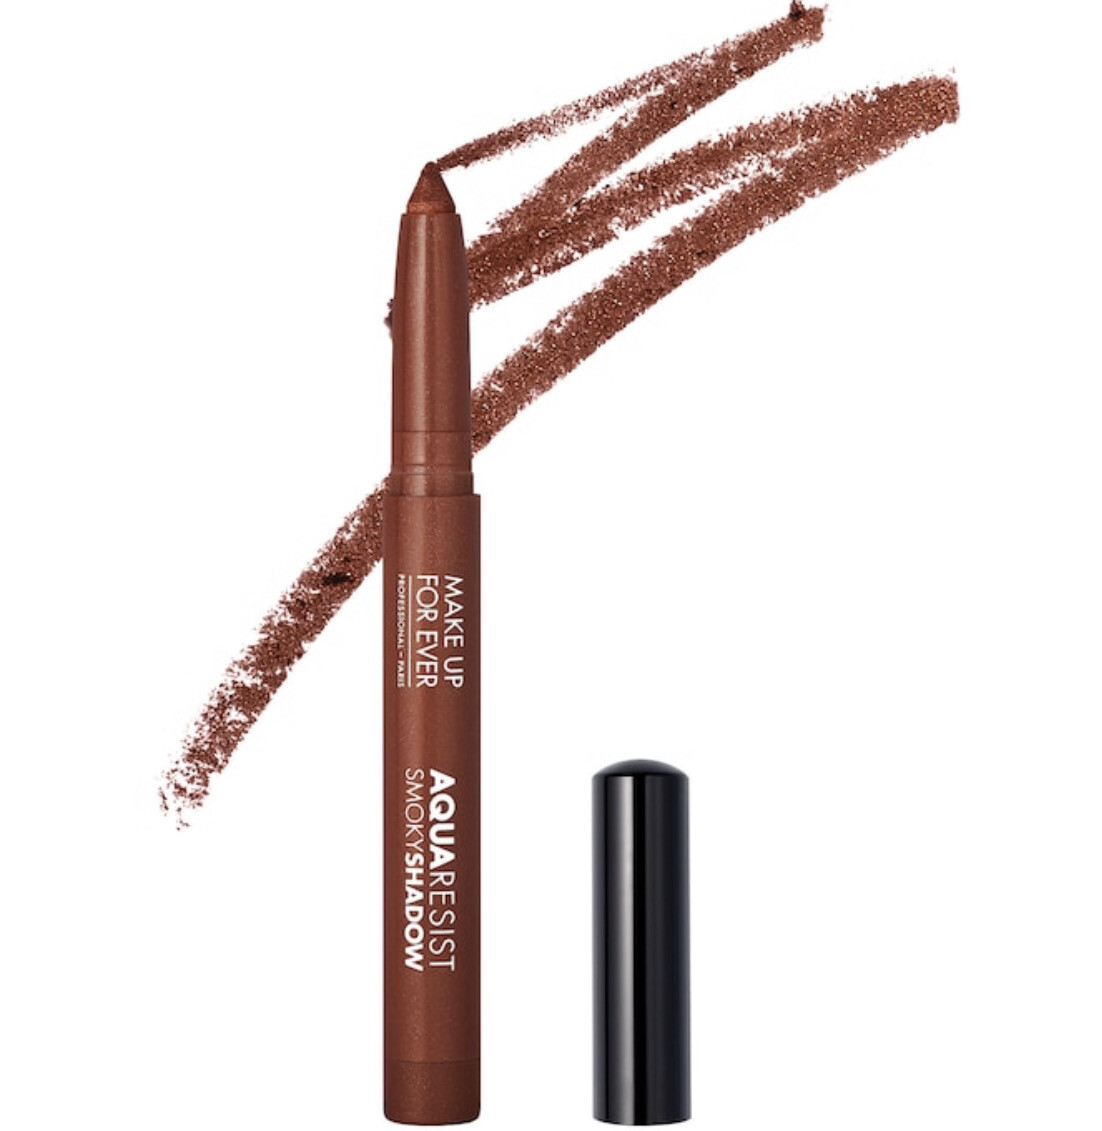 Make Up For Ever - Aqua Resist Smoky Eyeshadow Stick | 06 Earth - warm brown